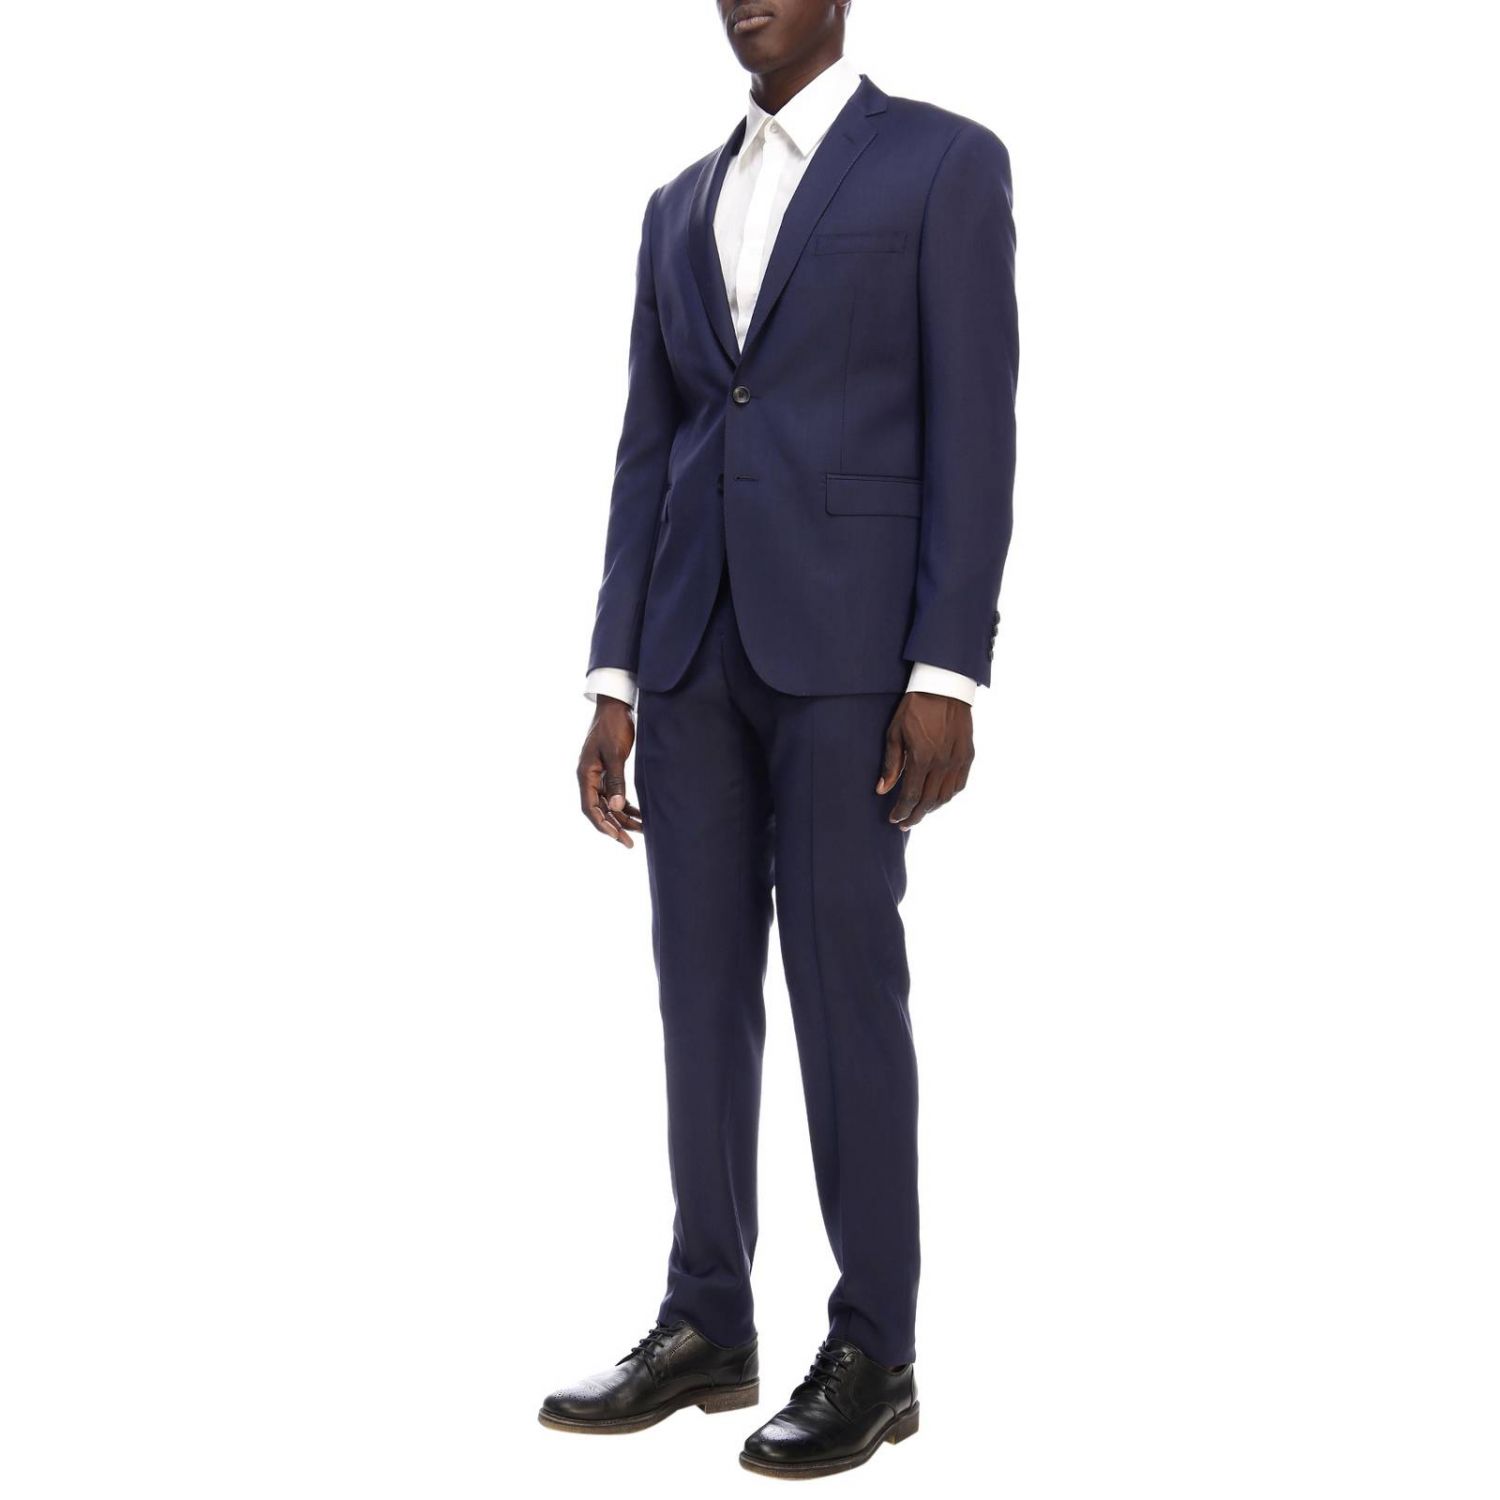 Claudio Tonello Outlet: Suit men - Black | Suit Claudio Tonello ...